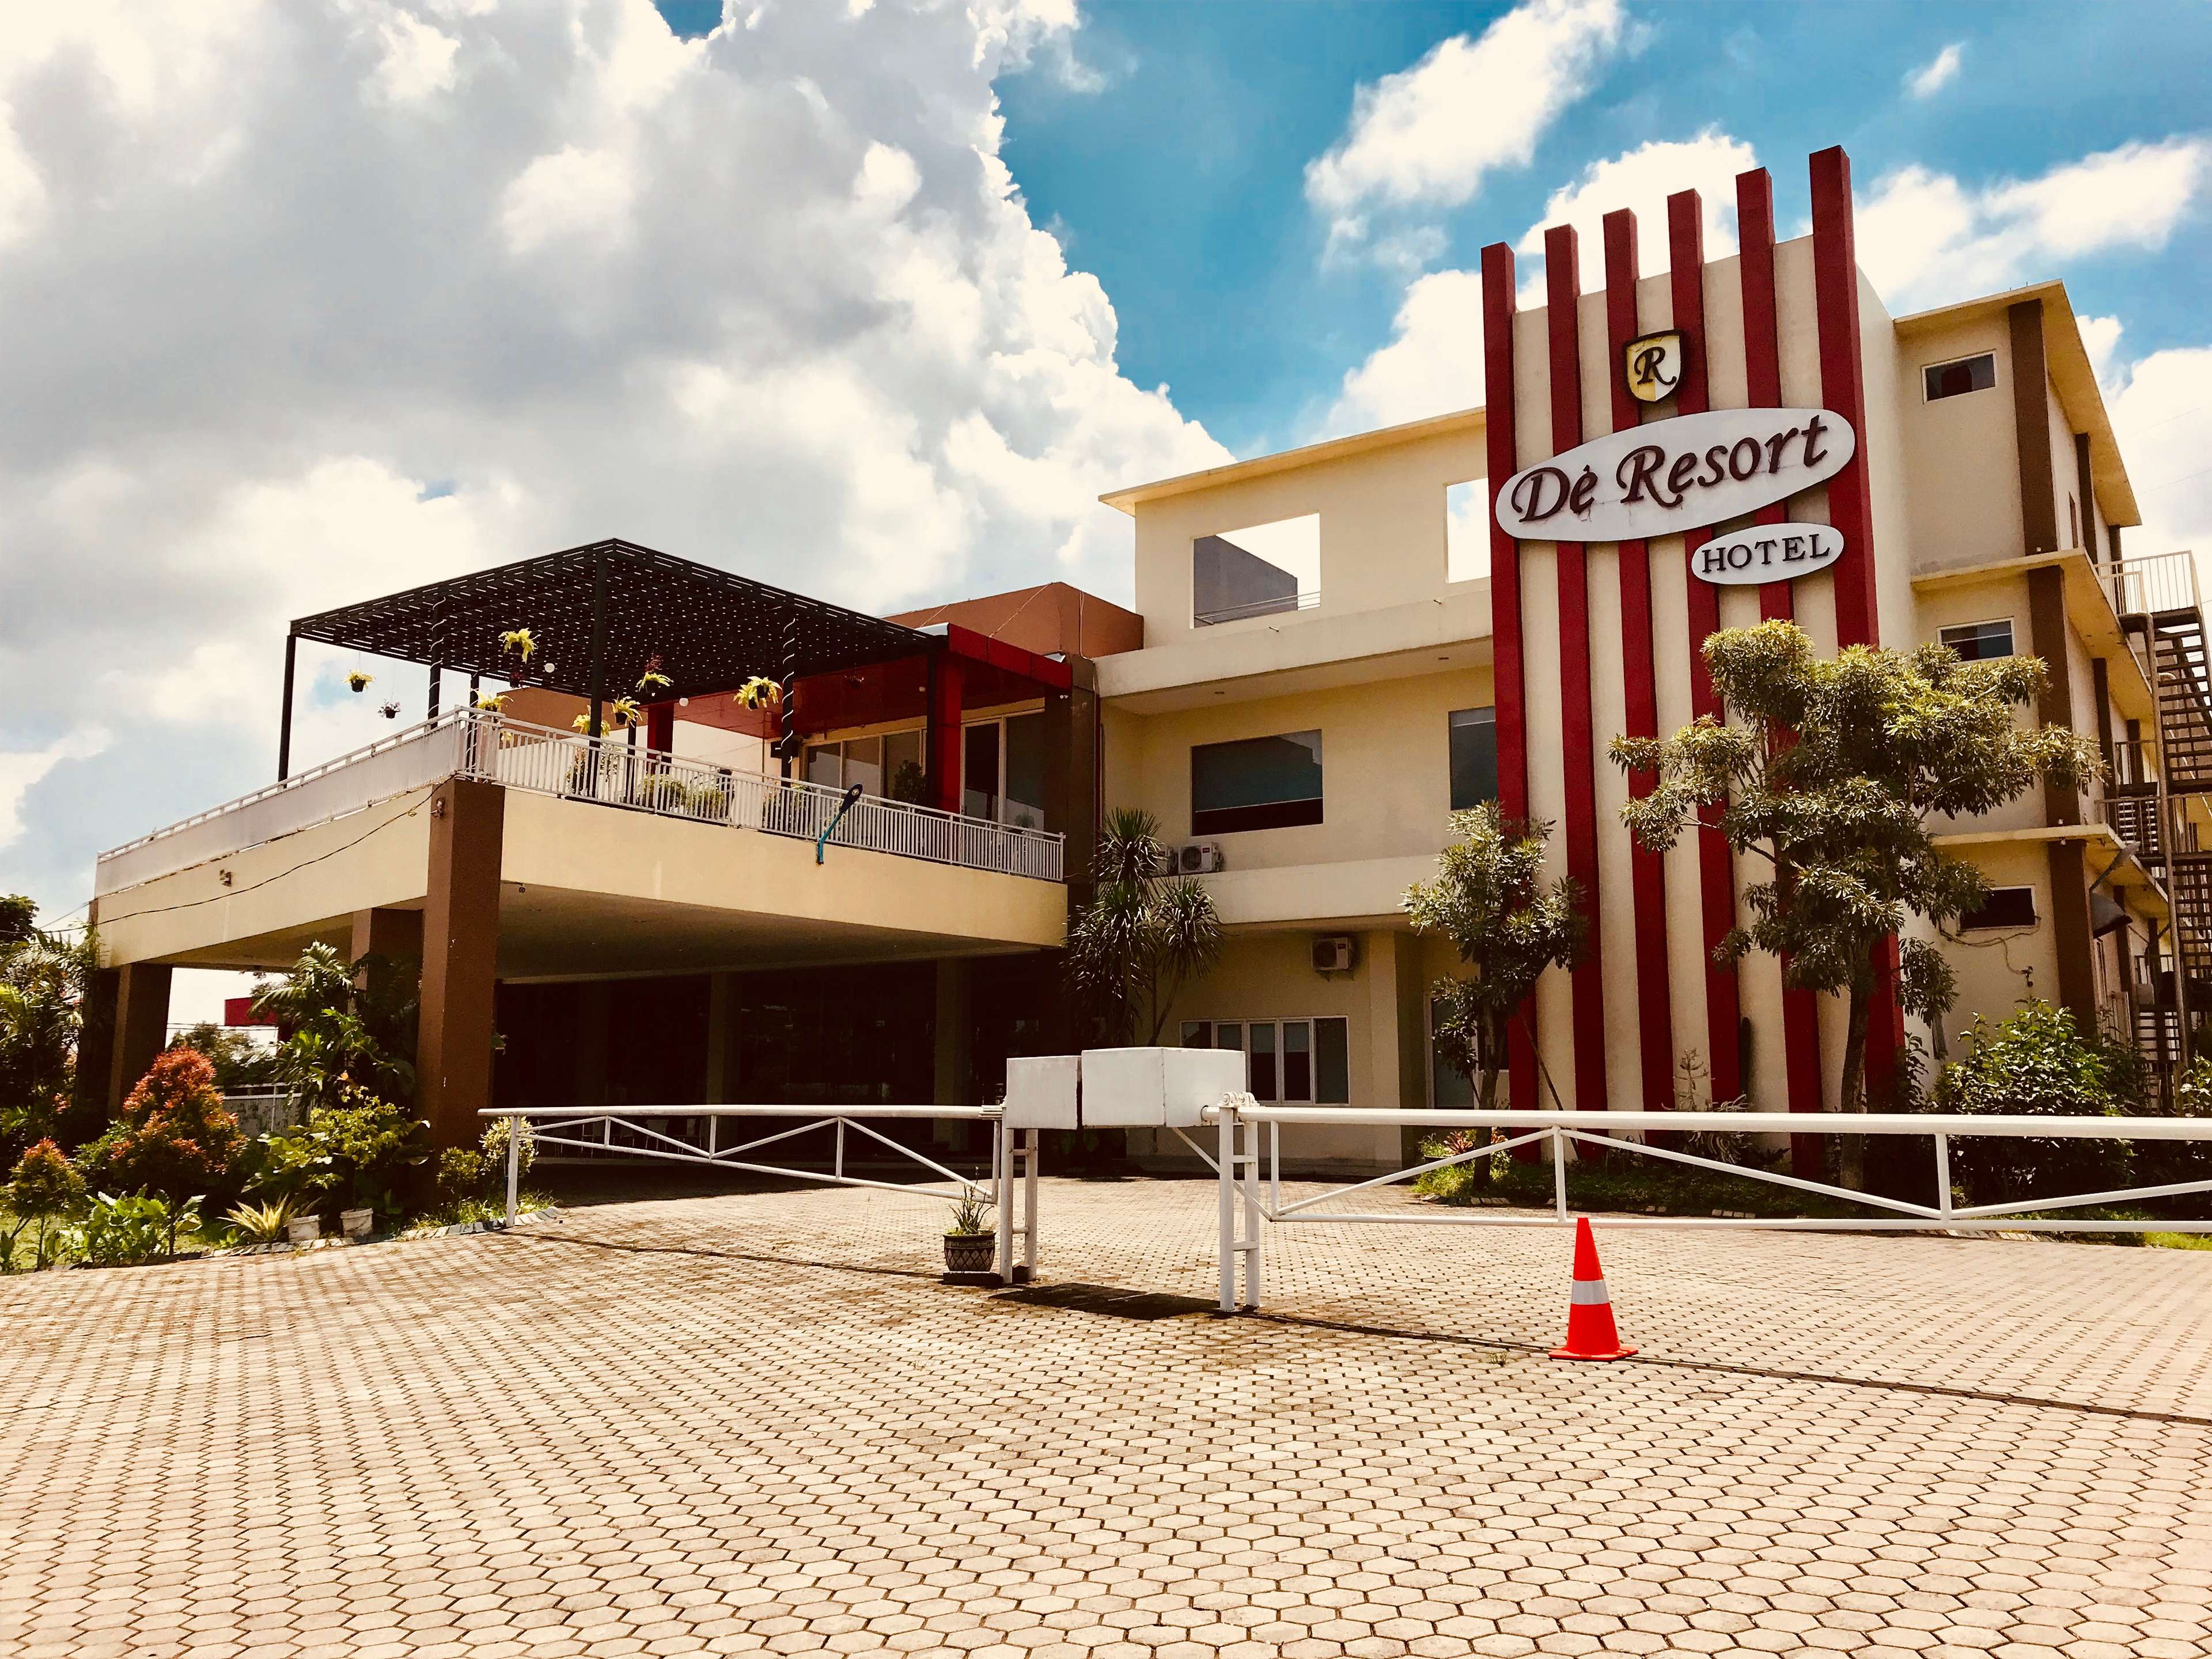 De Resort Hotel, Mojokerto Harga diskon s.d 30 di 2023